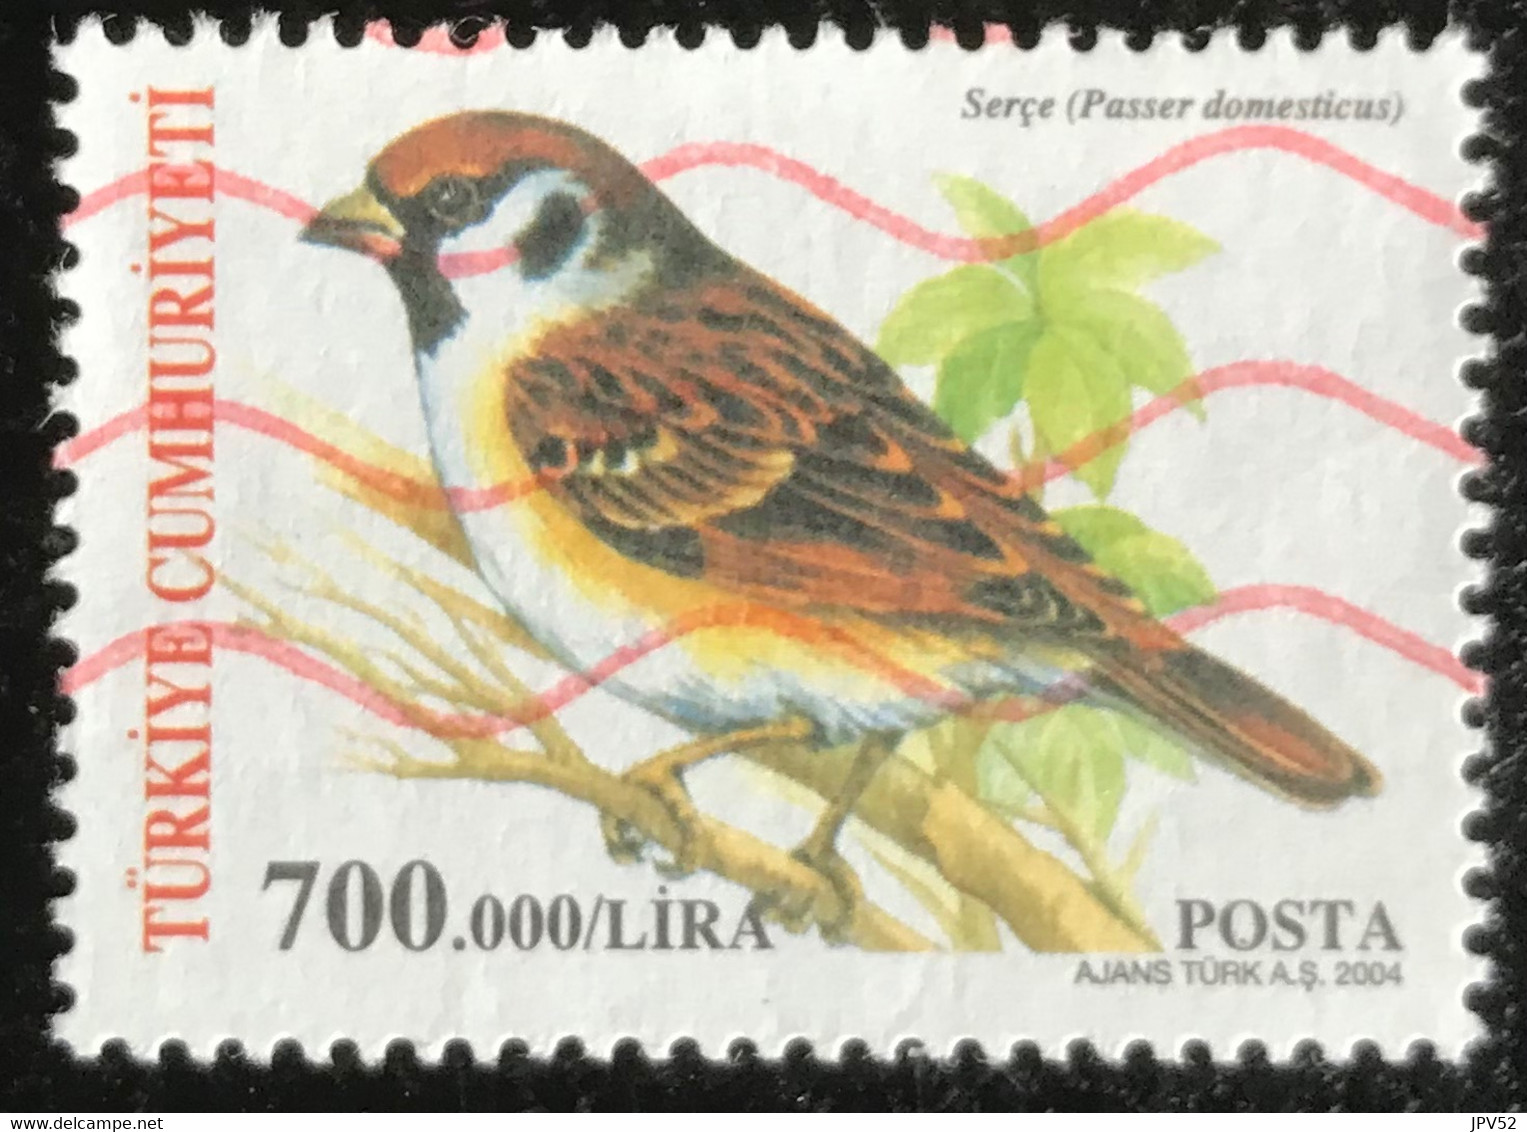 Türkiye Cumhuriyeti - 11/23 - (°)used - 2004 - Michel 3388 - Zangvogels - Used Stamps